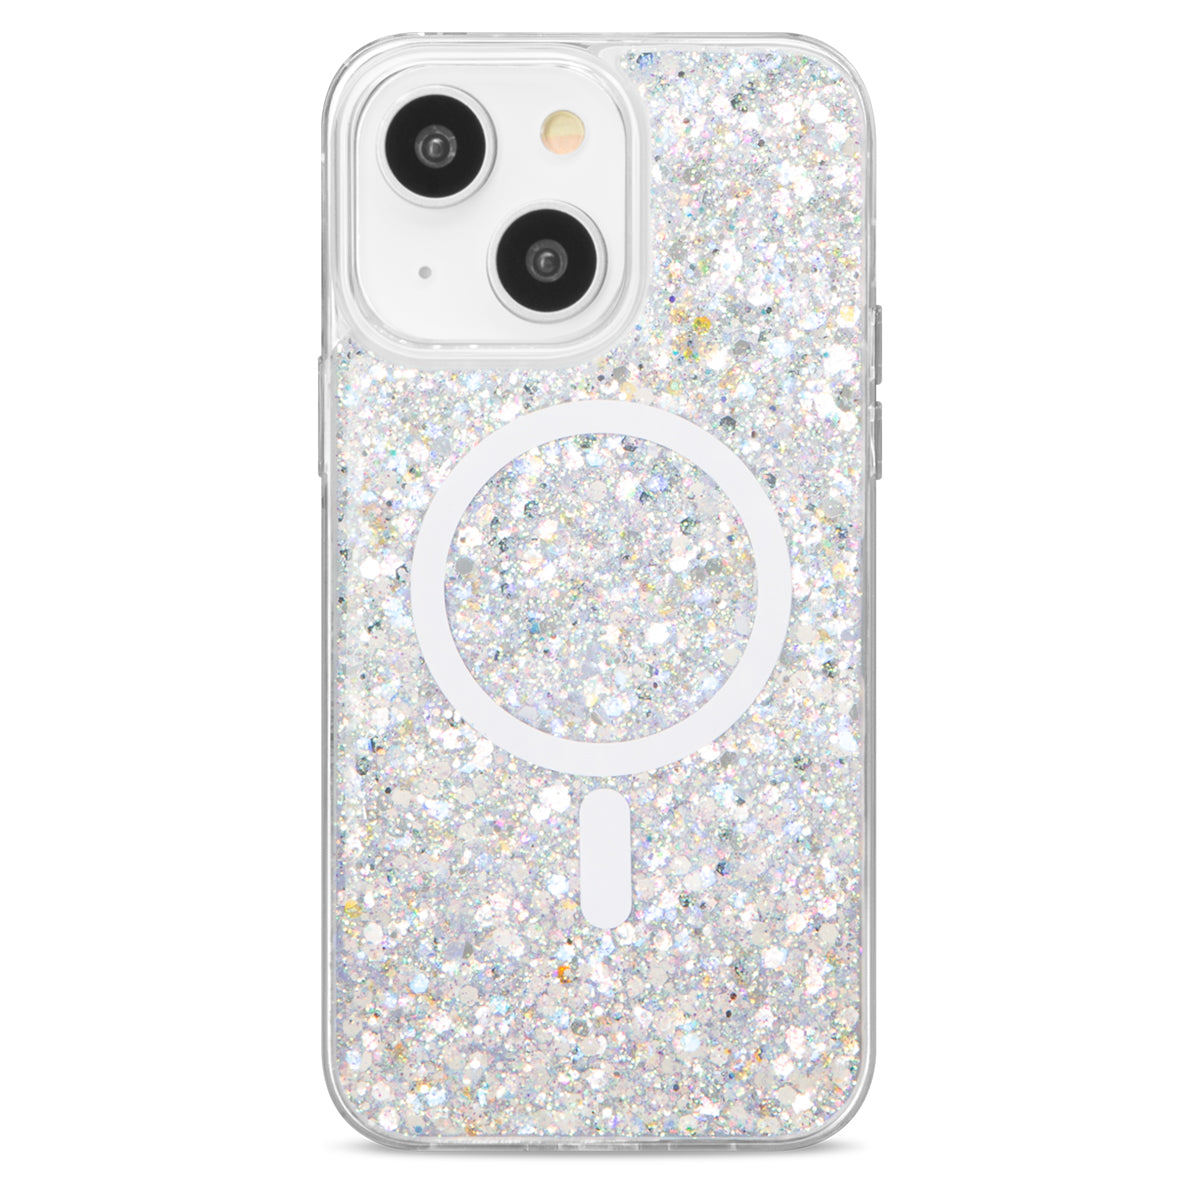 Showcase Slim Glam - iPhone 15 Plus Silver w/ MagSafe Cases